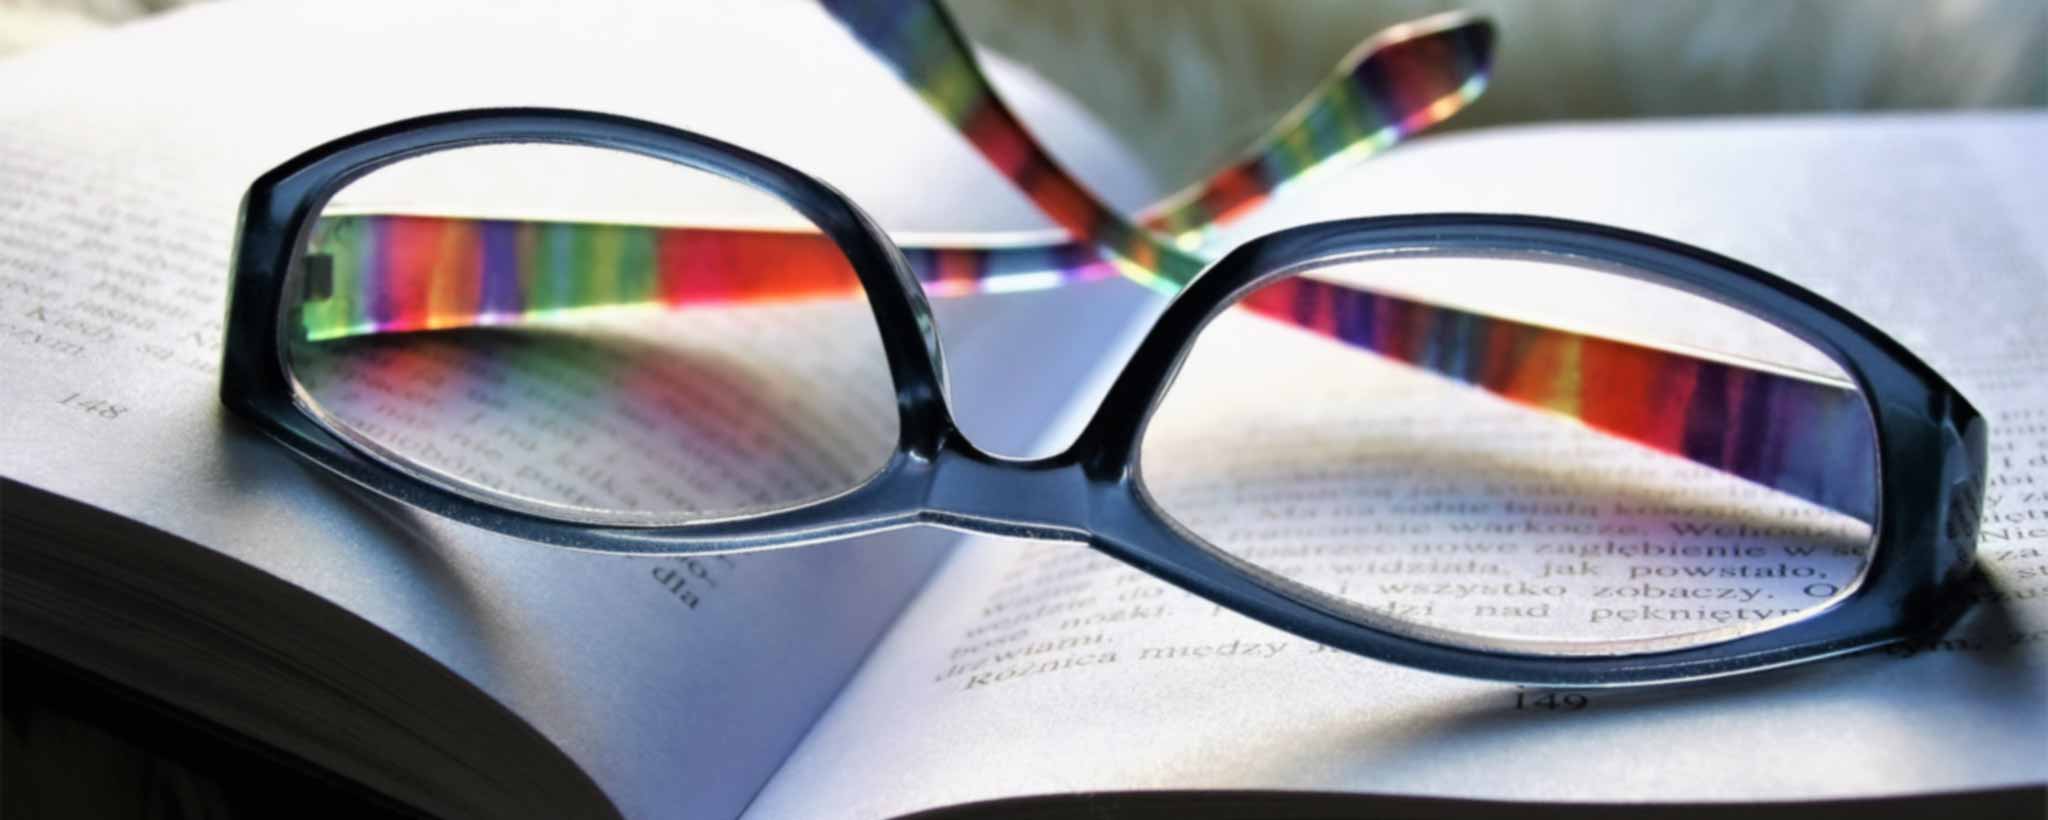 'Reading eyeglasses on book'